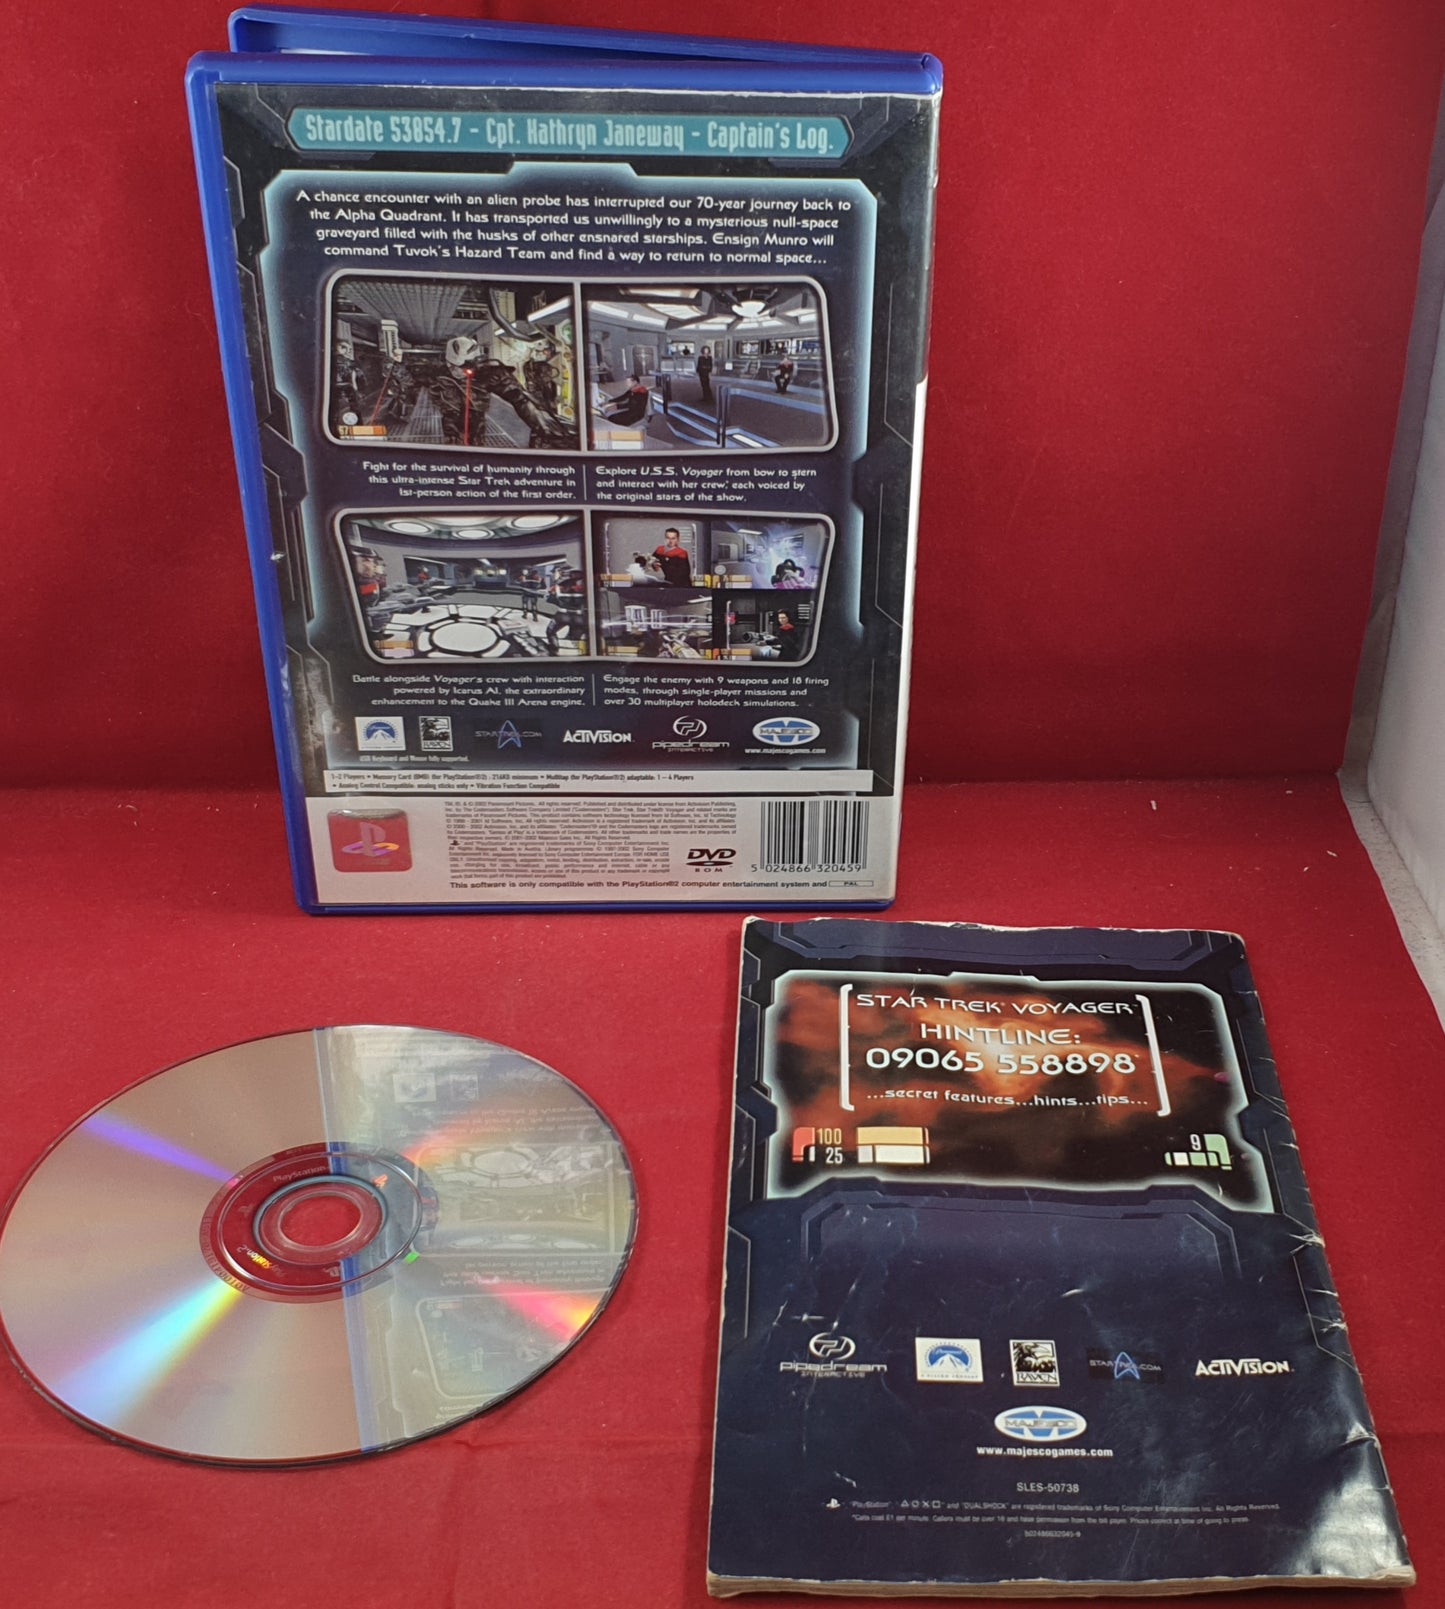 Star Trek Voyager Elite Force Sony Playstation 2 (PS2) Game